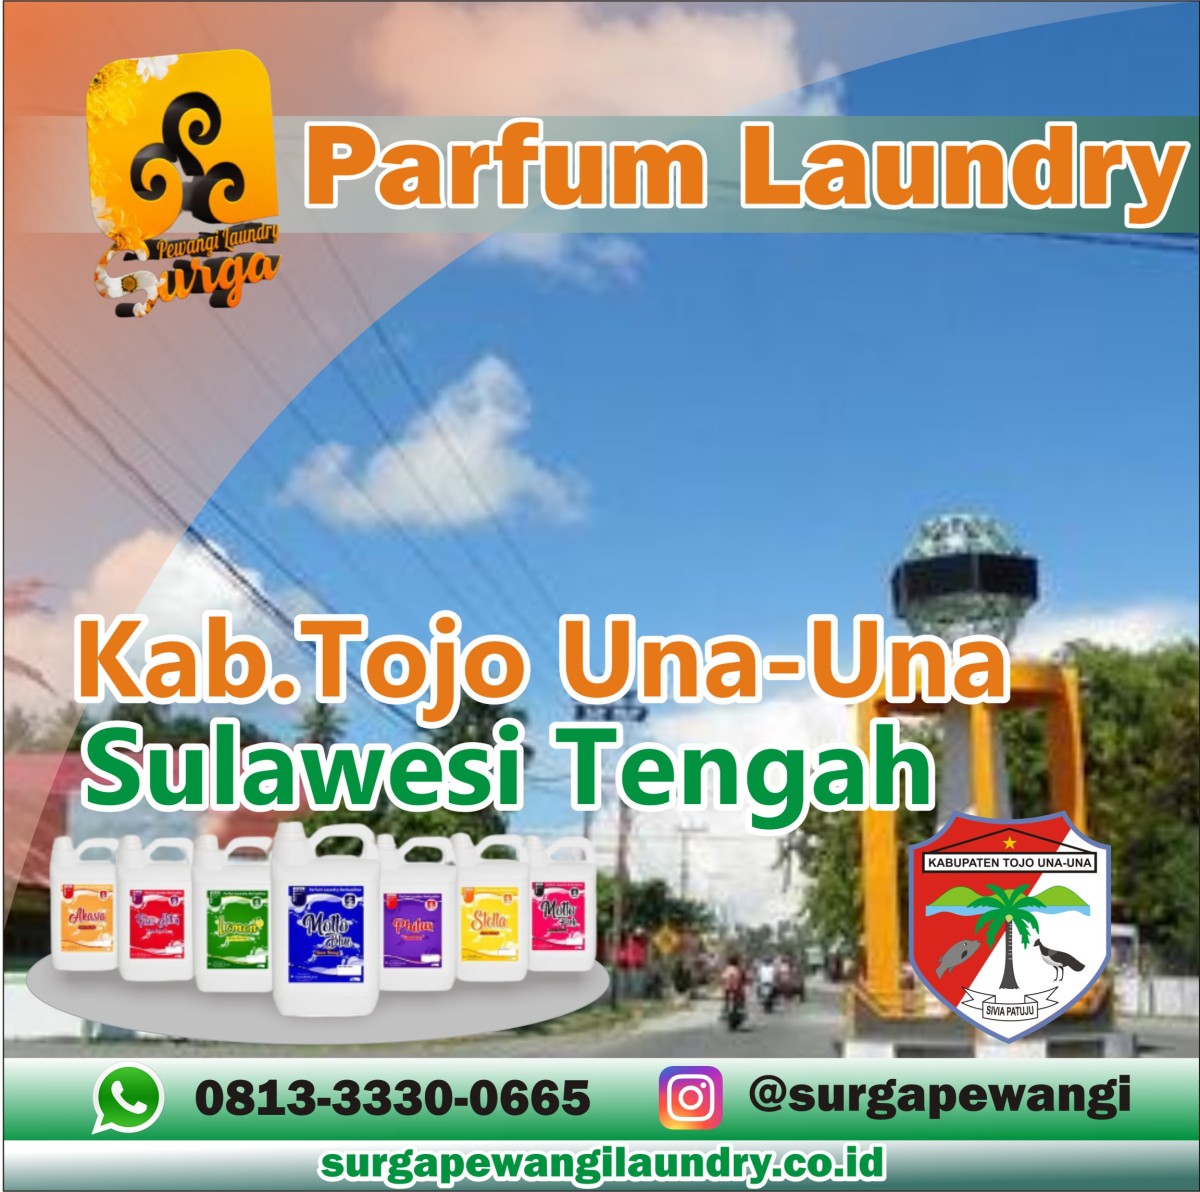 Parfum Laundry Tojo Una-Una, Sulawesi Tengah